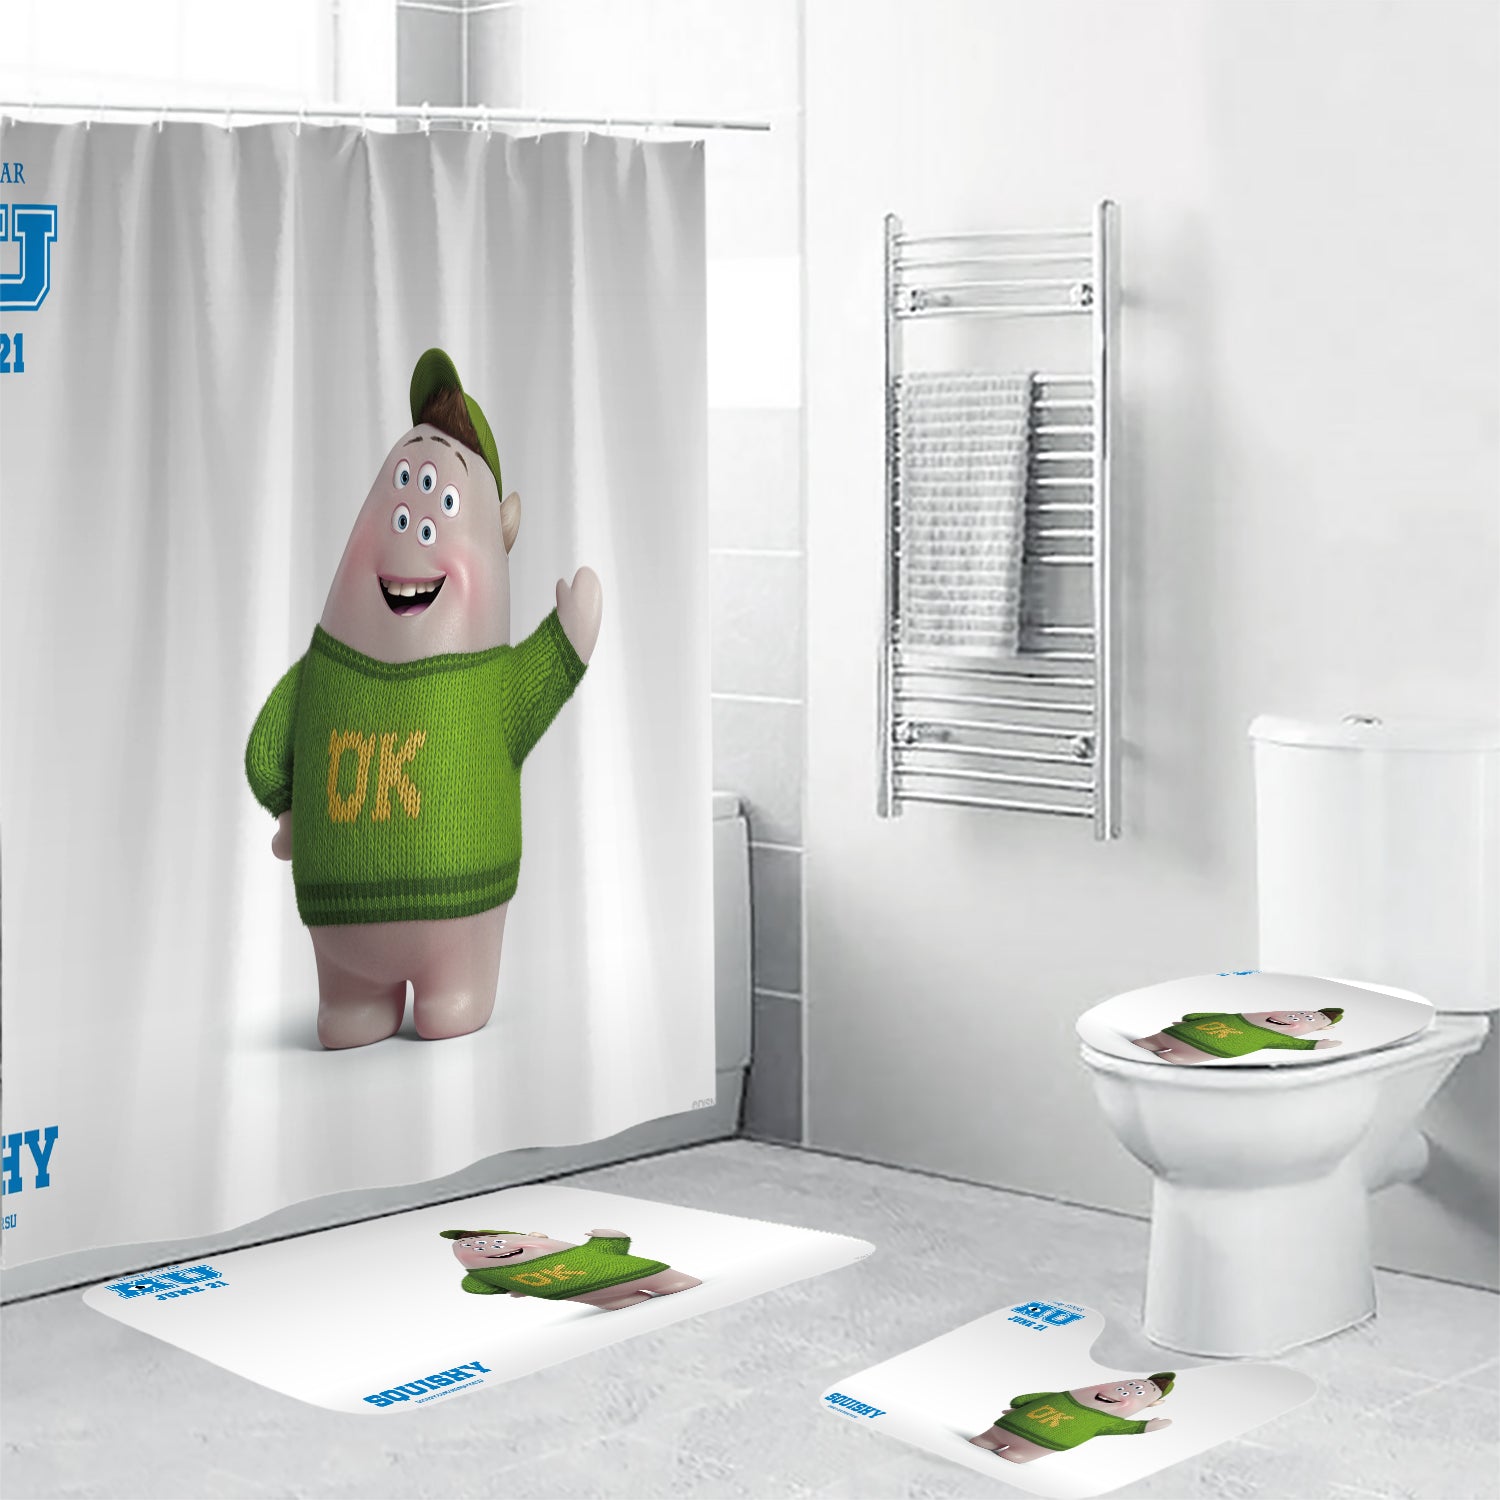 Characters Squishy Monsters Inc Monsters University Movie Disney Pixar Waterproof Shower Curtain Non-Slip Toilet Lid Cover Bath Mat - Bathroom Set